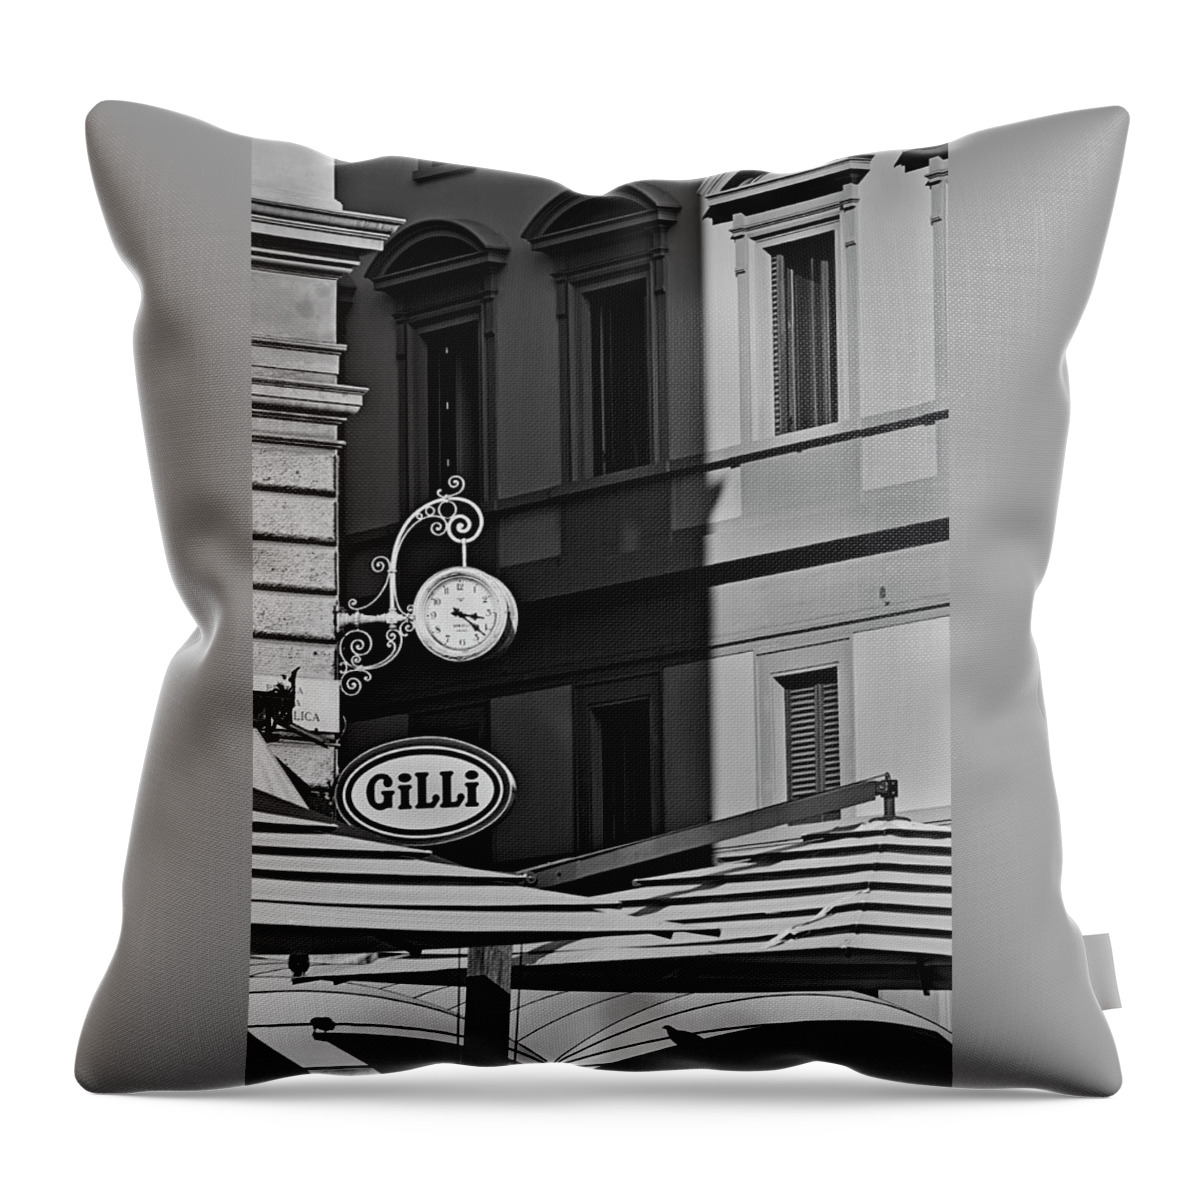 Gilli Throw Pillow featuring the photograph Gilli by Jill Love